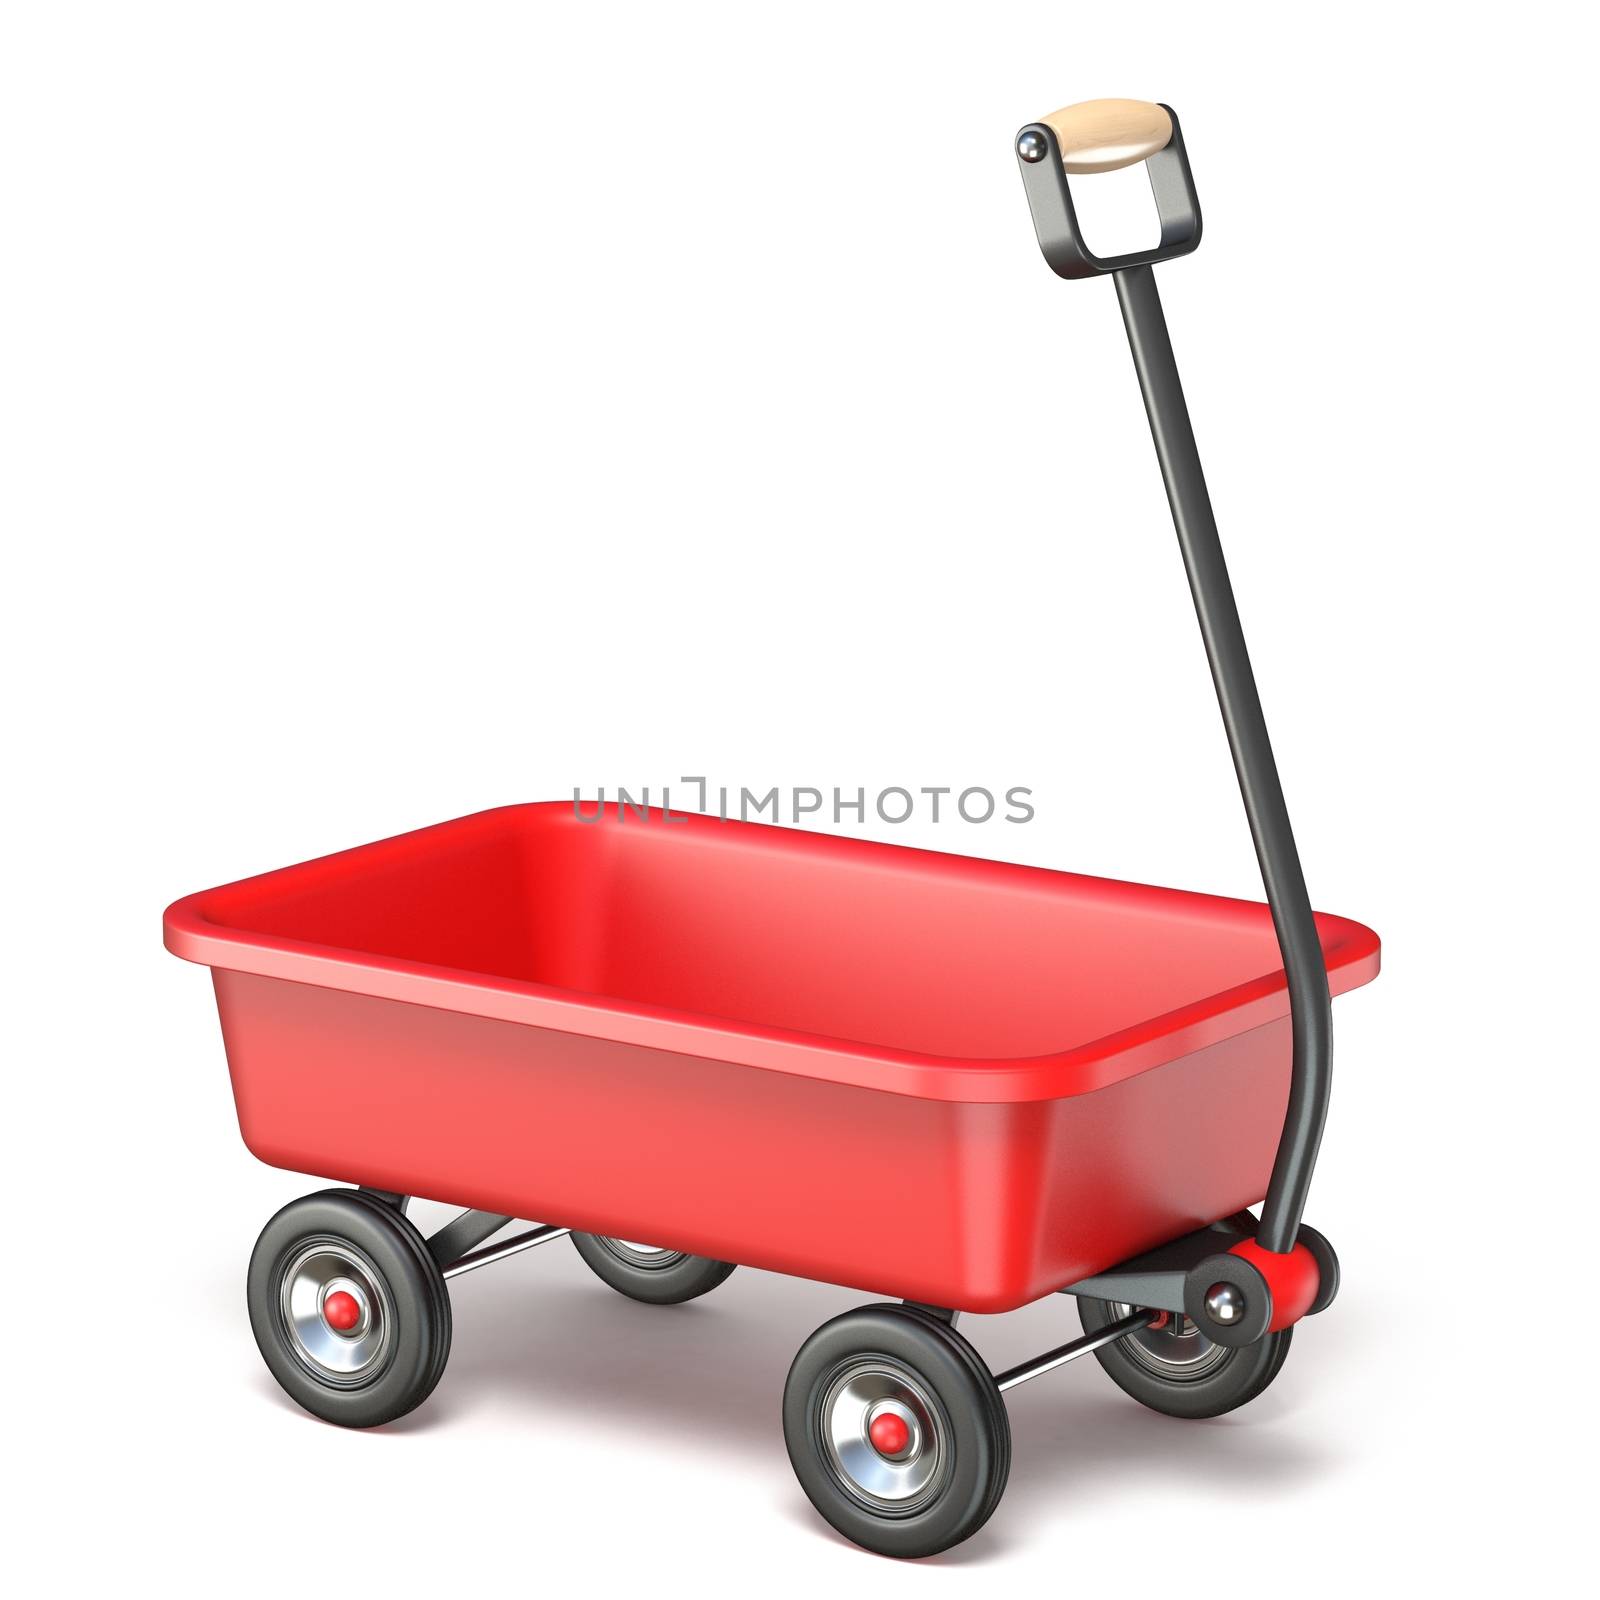 Toy mini wagon 3D render illustration isolated on white background